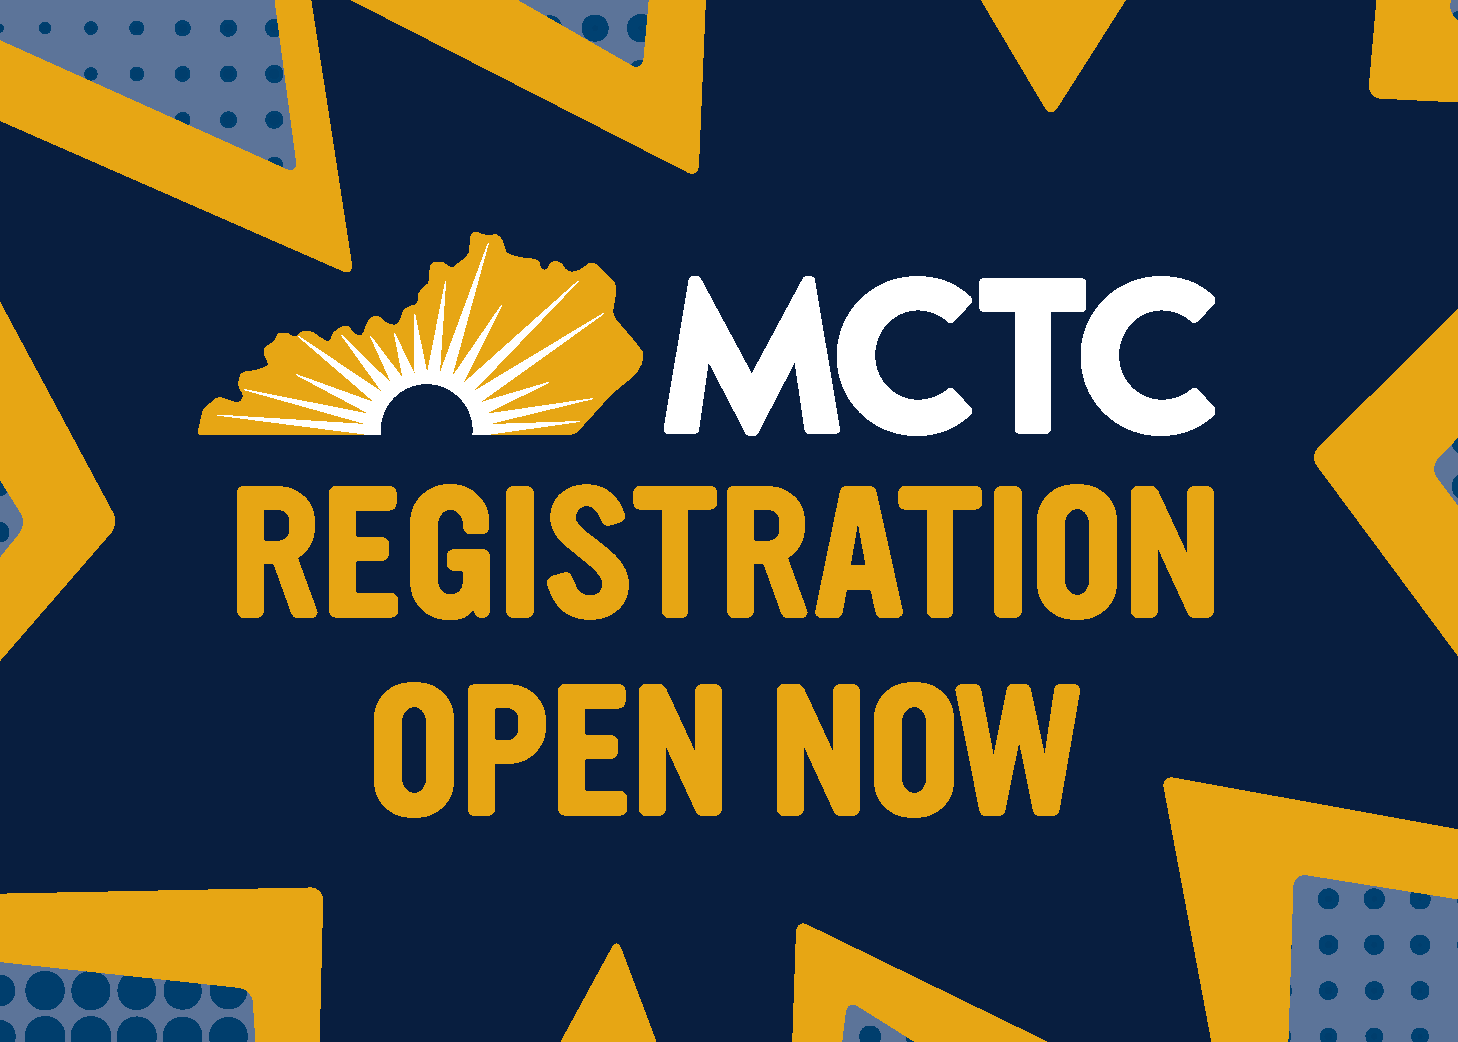 MCTC Registration Open Now